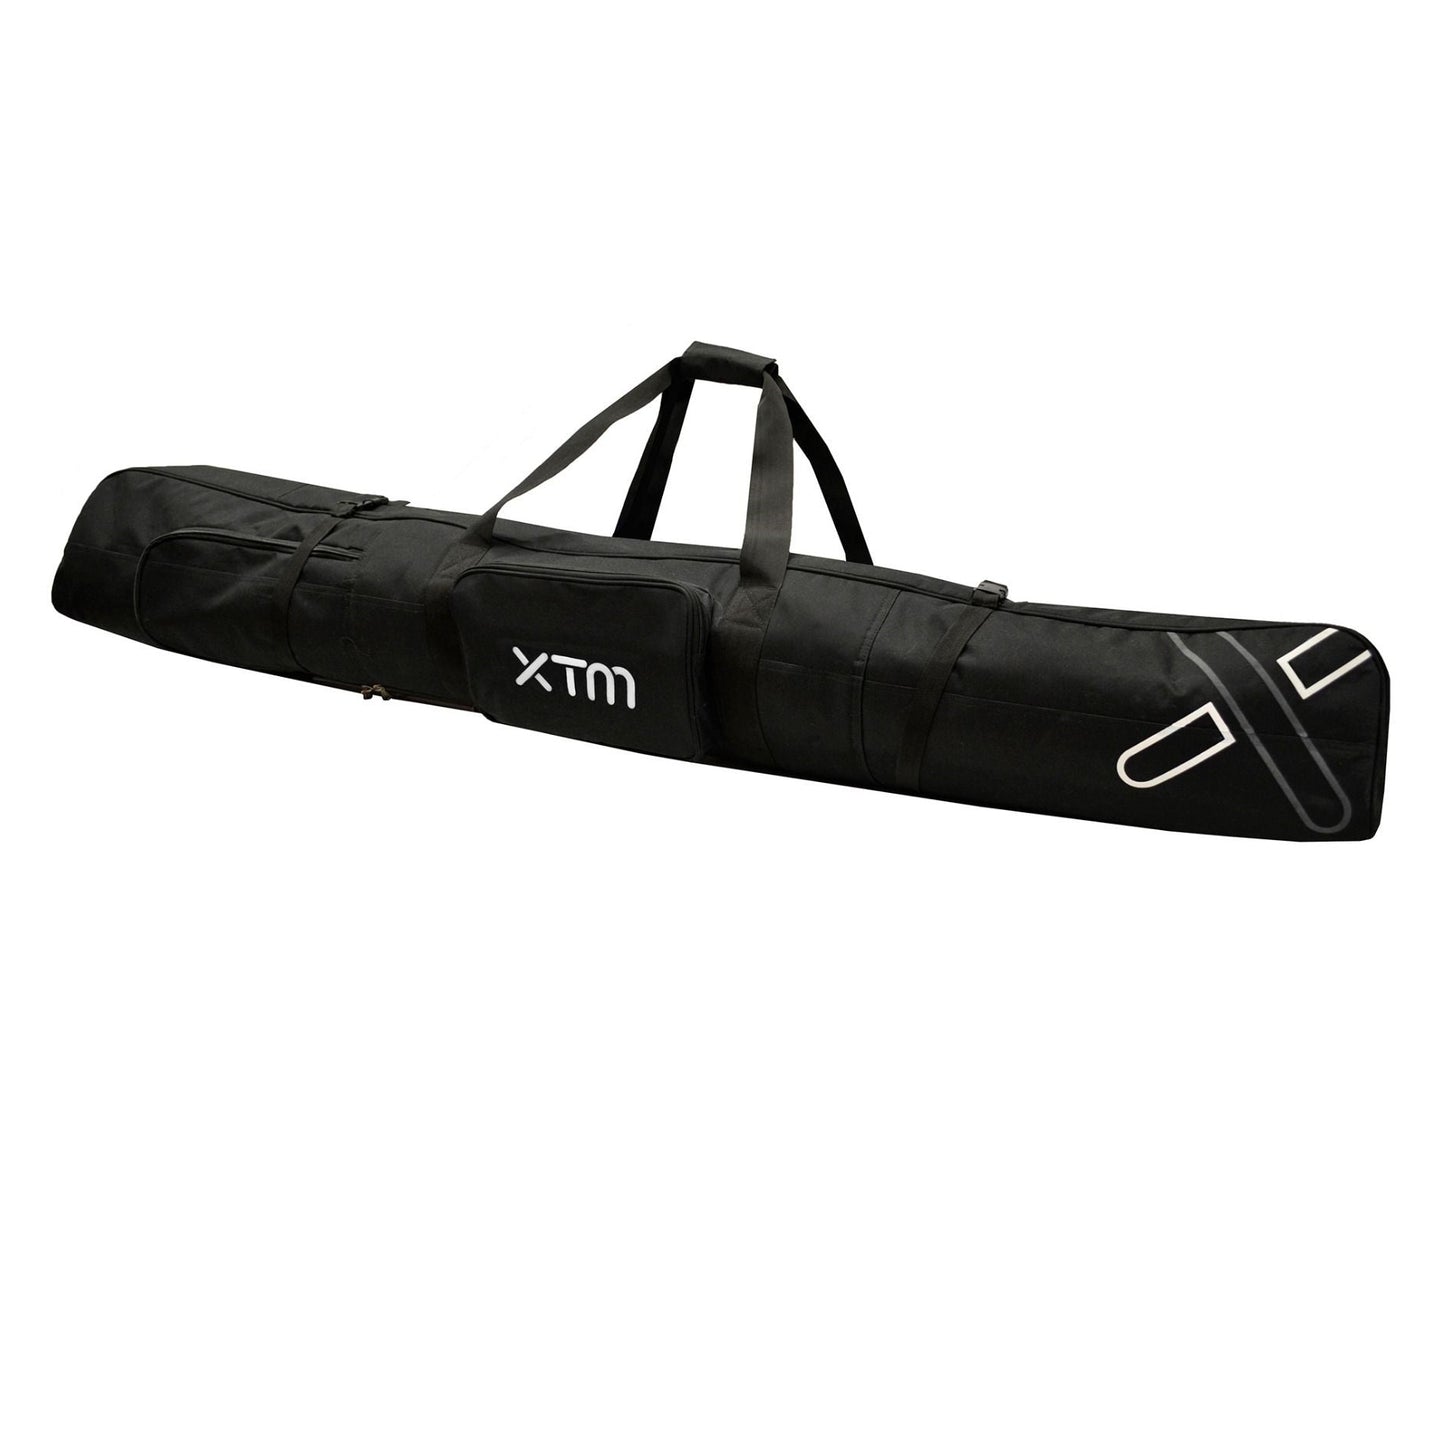 XTM Double Ski Bag